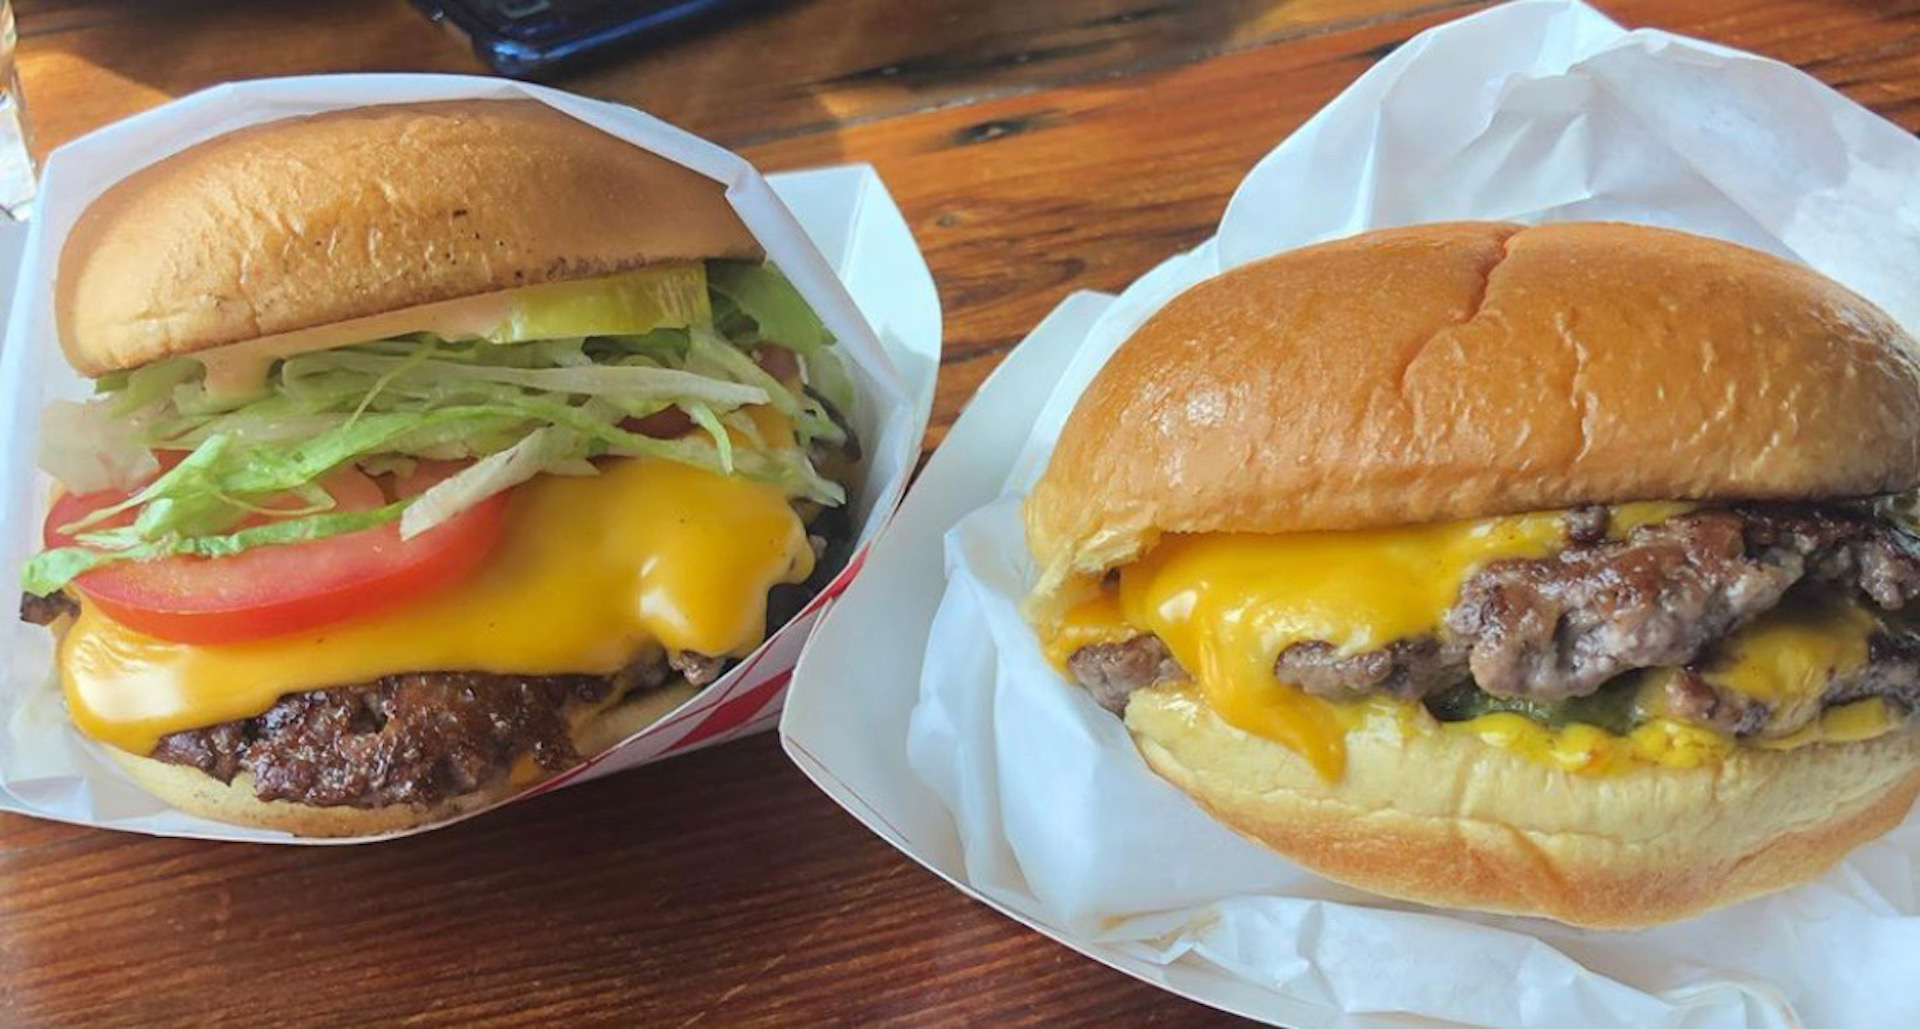 A drive thru burger and an OG burger from Oakland's Lovely's.